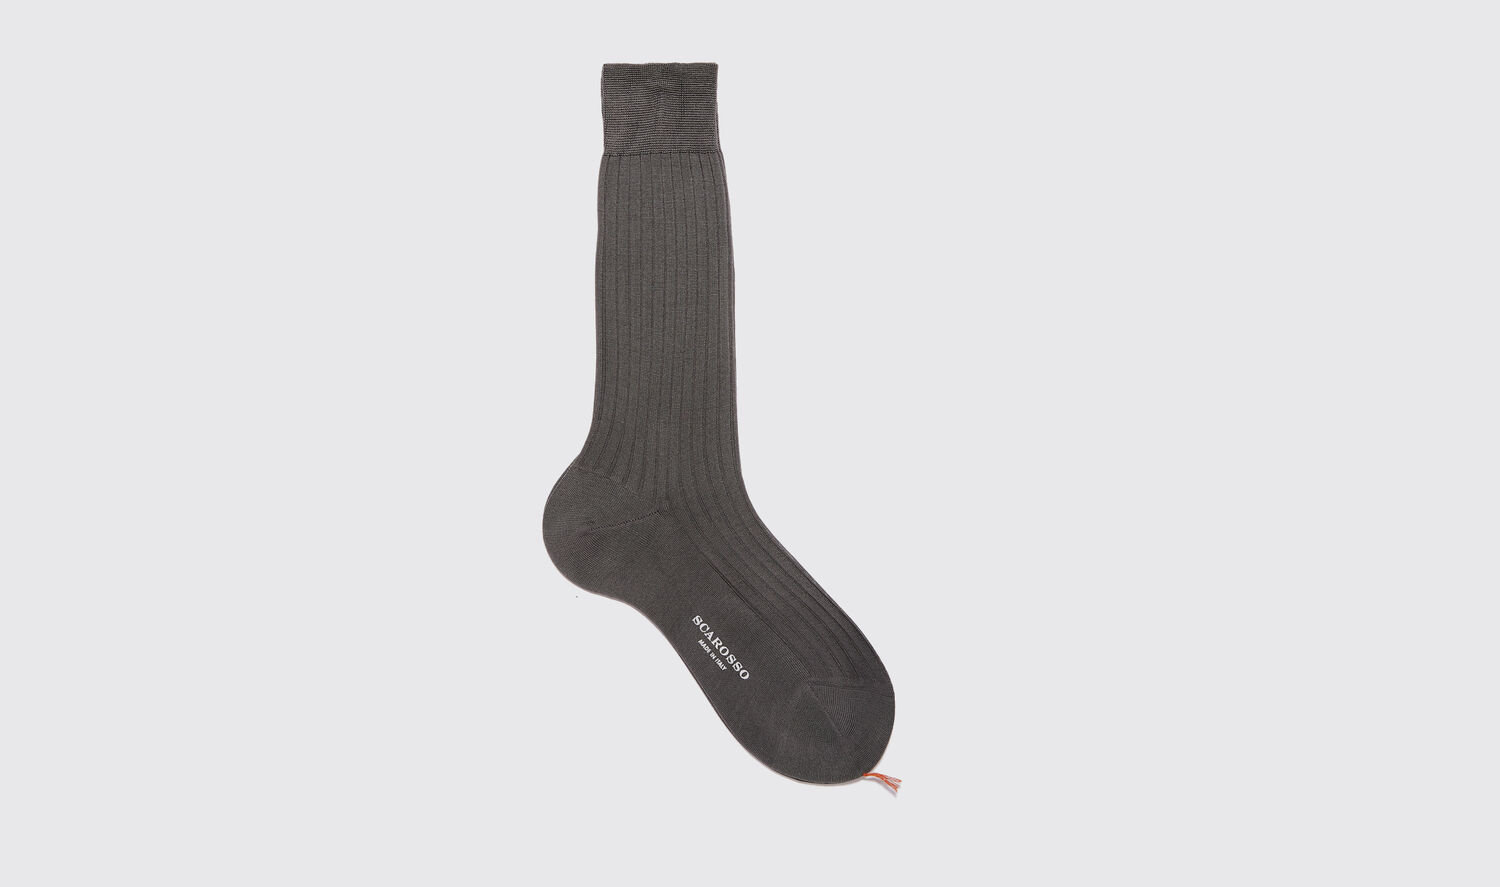 Scarosso Socks Grey Cotton Calf Socks Cotton In Grey - Cotton